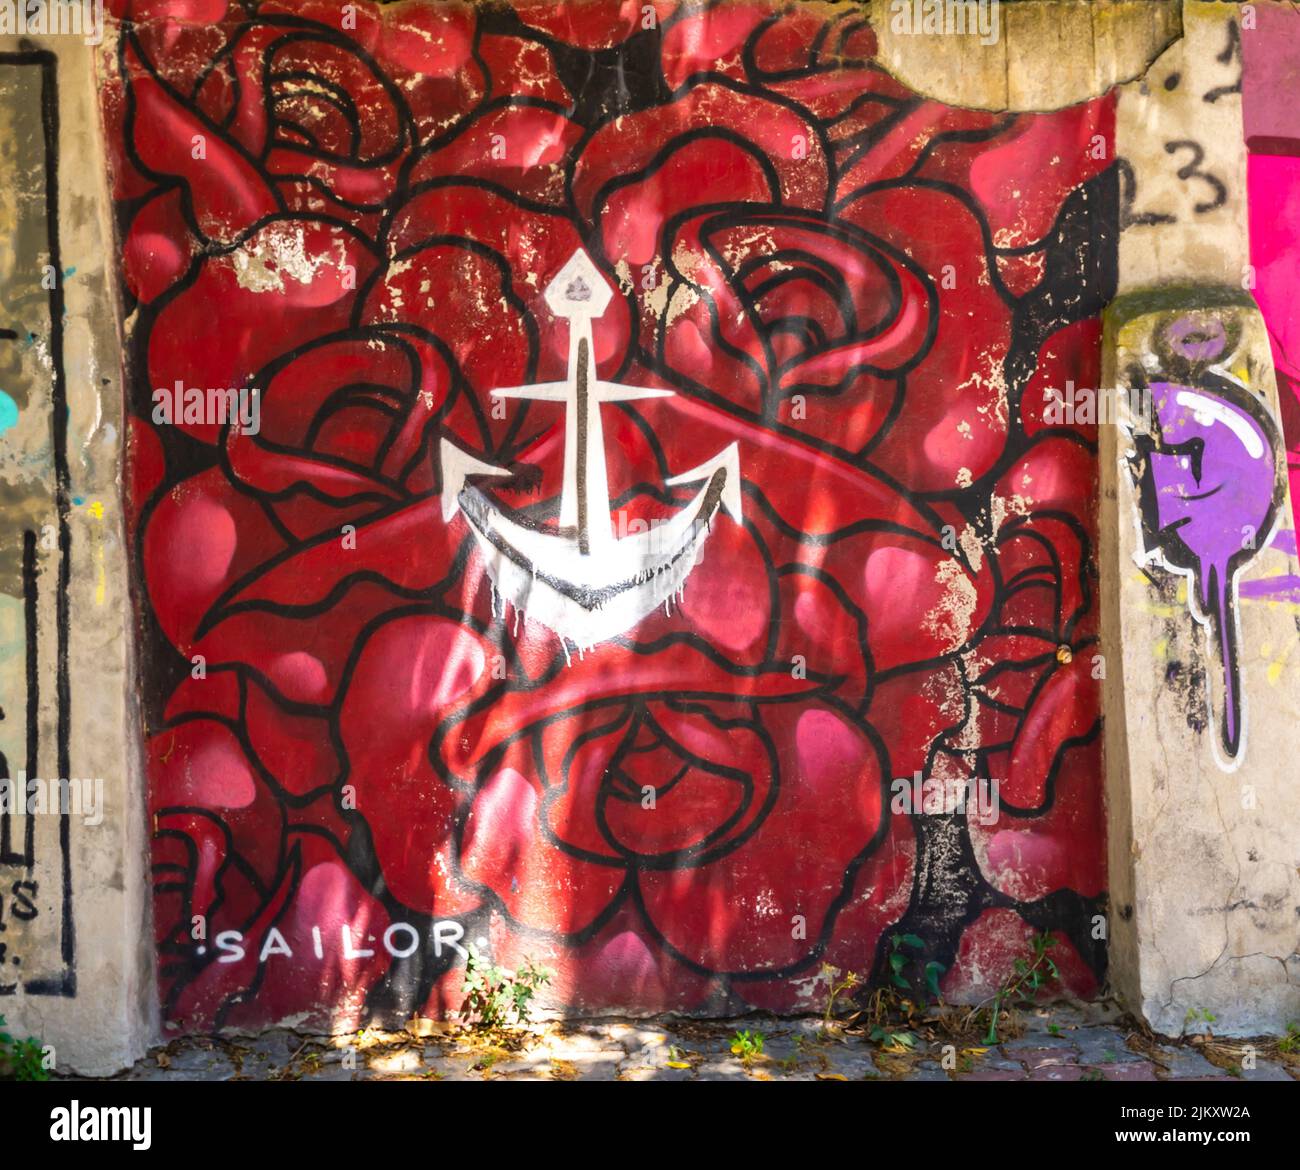 Arte callejero, mural de Sailor que representa un ancor en rosas rojas en Moda, Kadiköy distrito de Estambul, Turquía Foto de stock